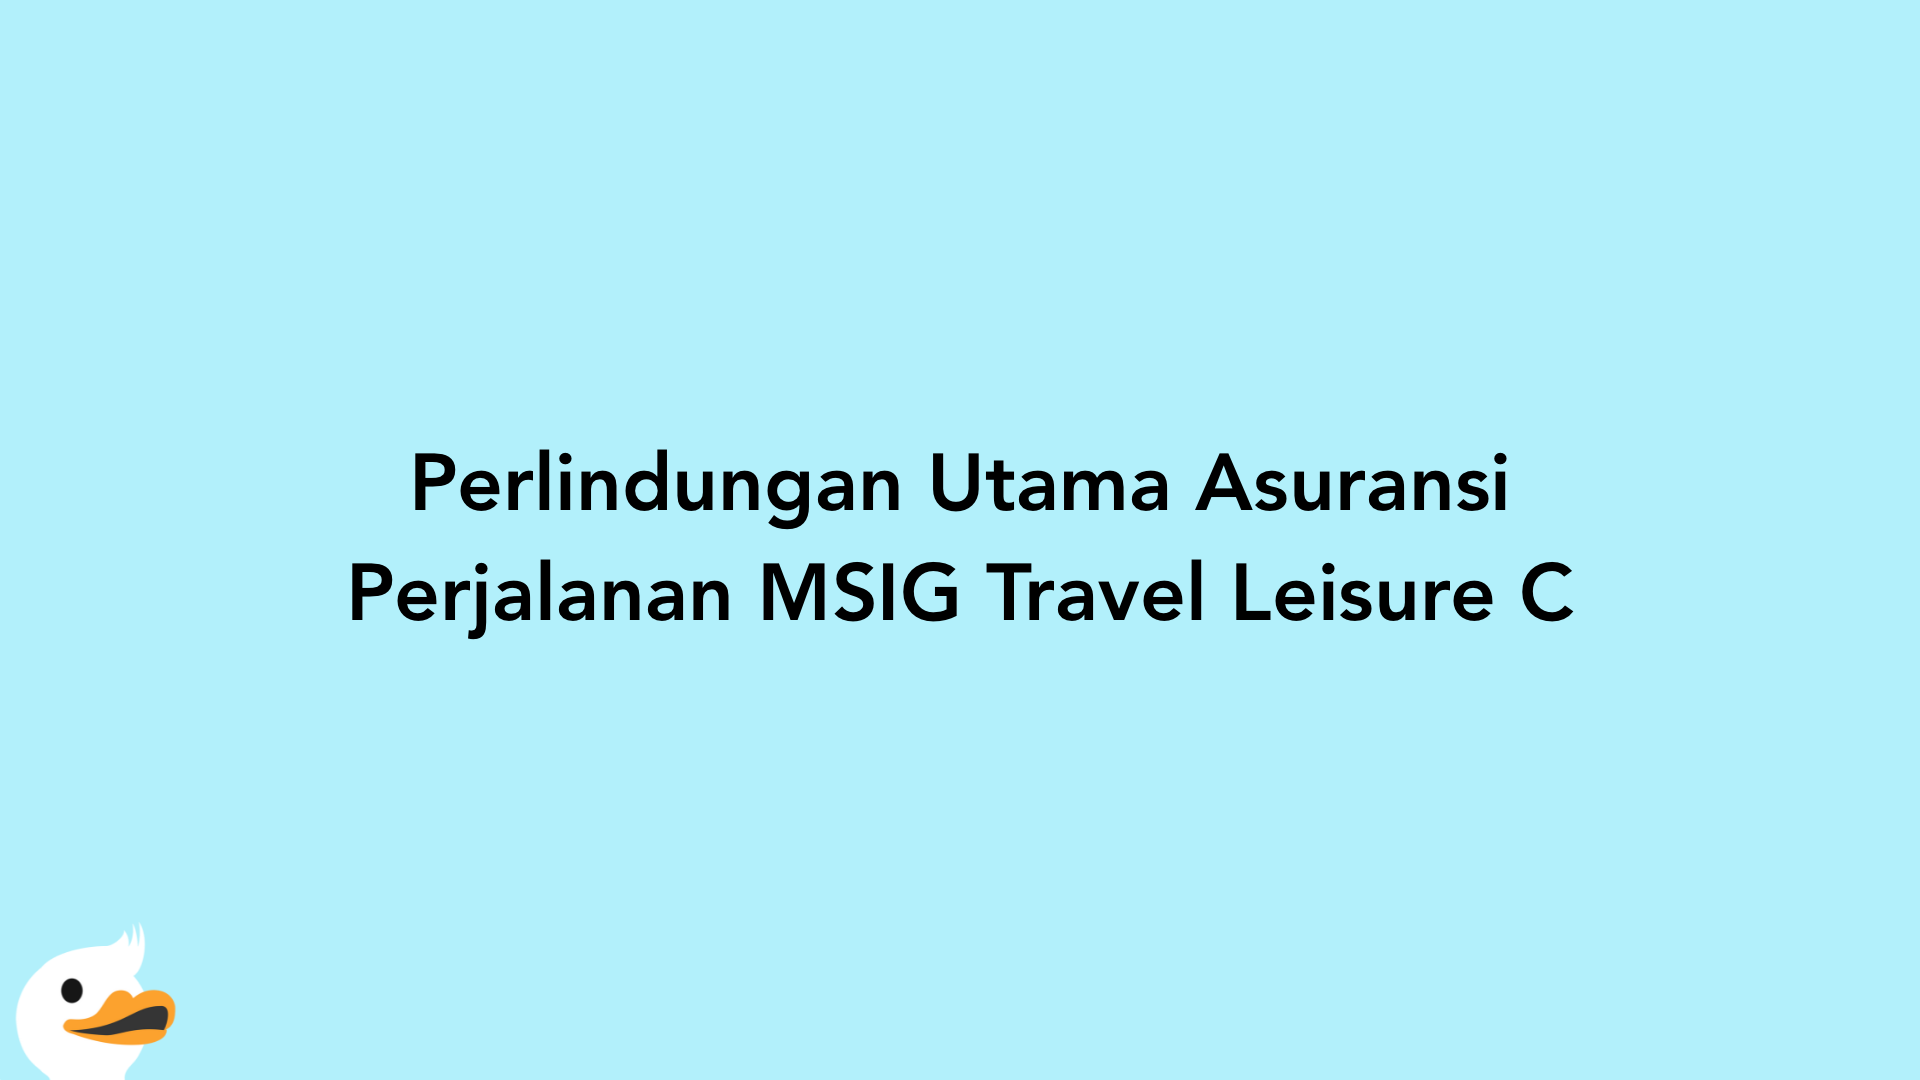 Perlindungan Utama Asuransi Perjalanan MSIG Travel Leisure C